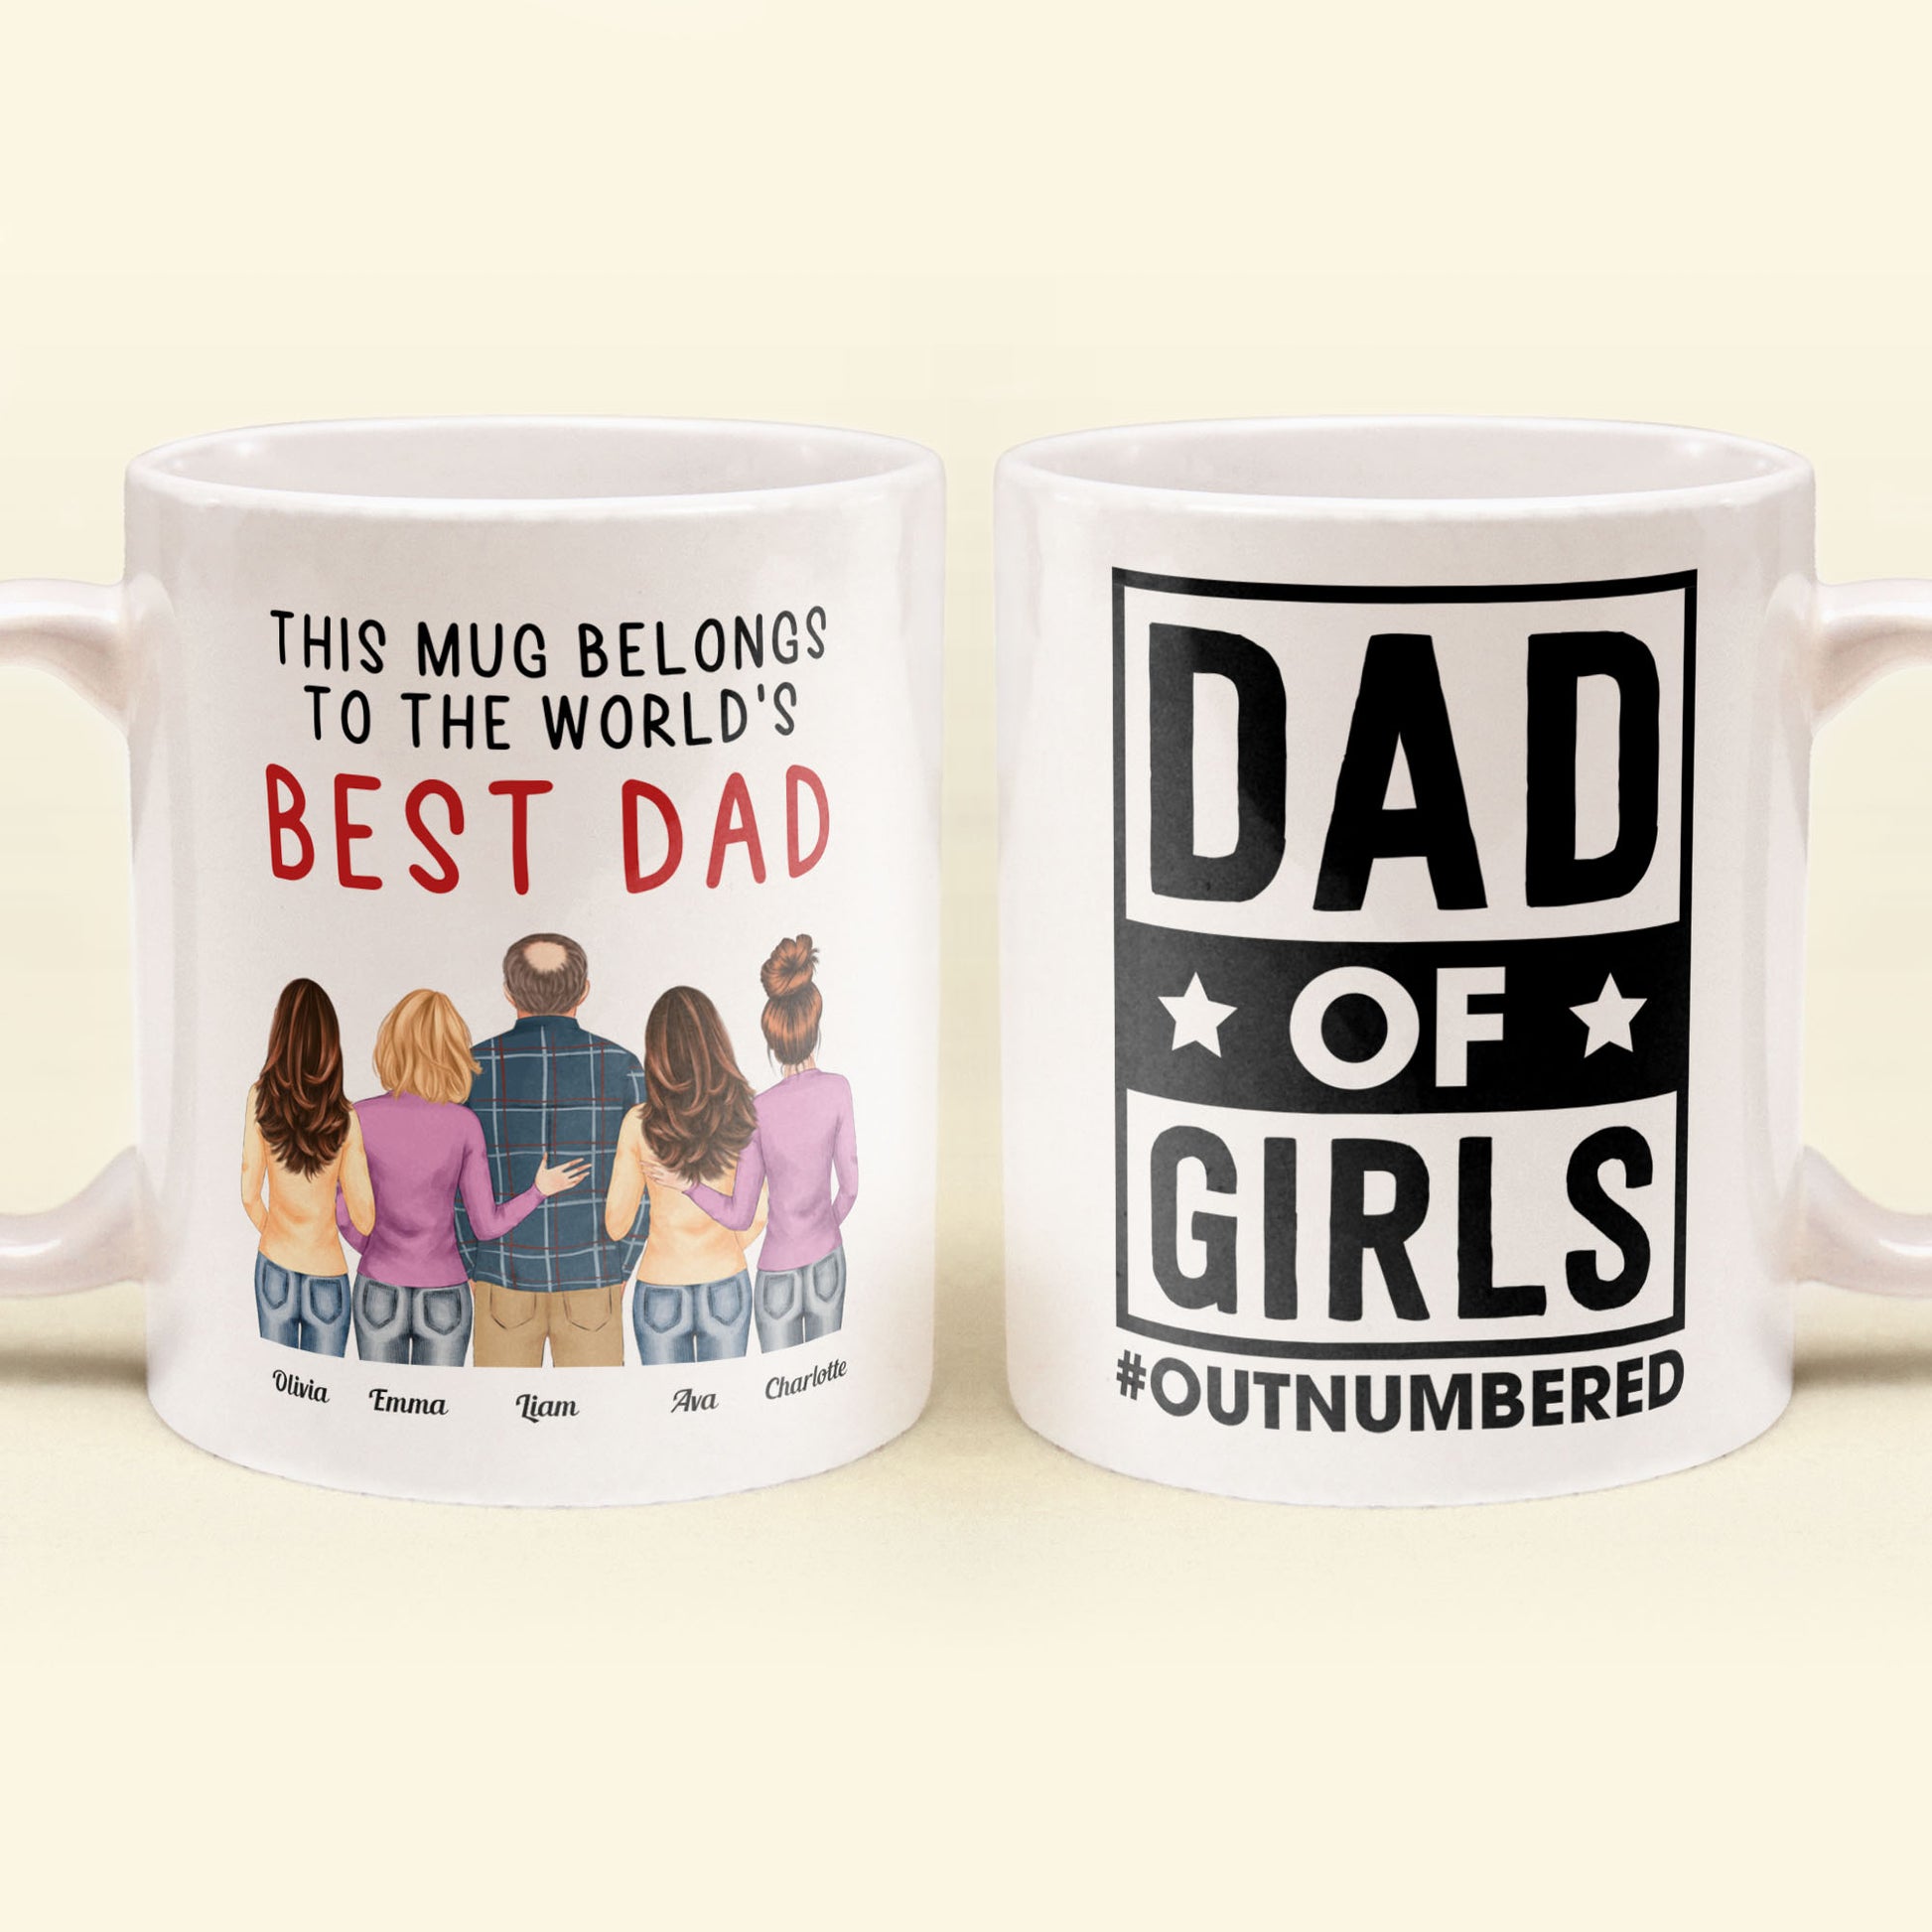 Having Me As A Daughter/Son - Personalized Mug – Macorner